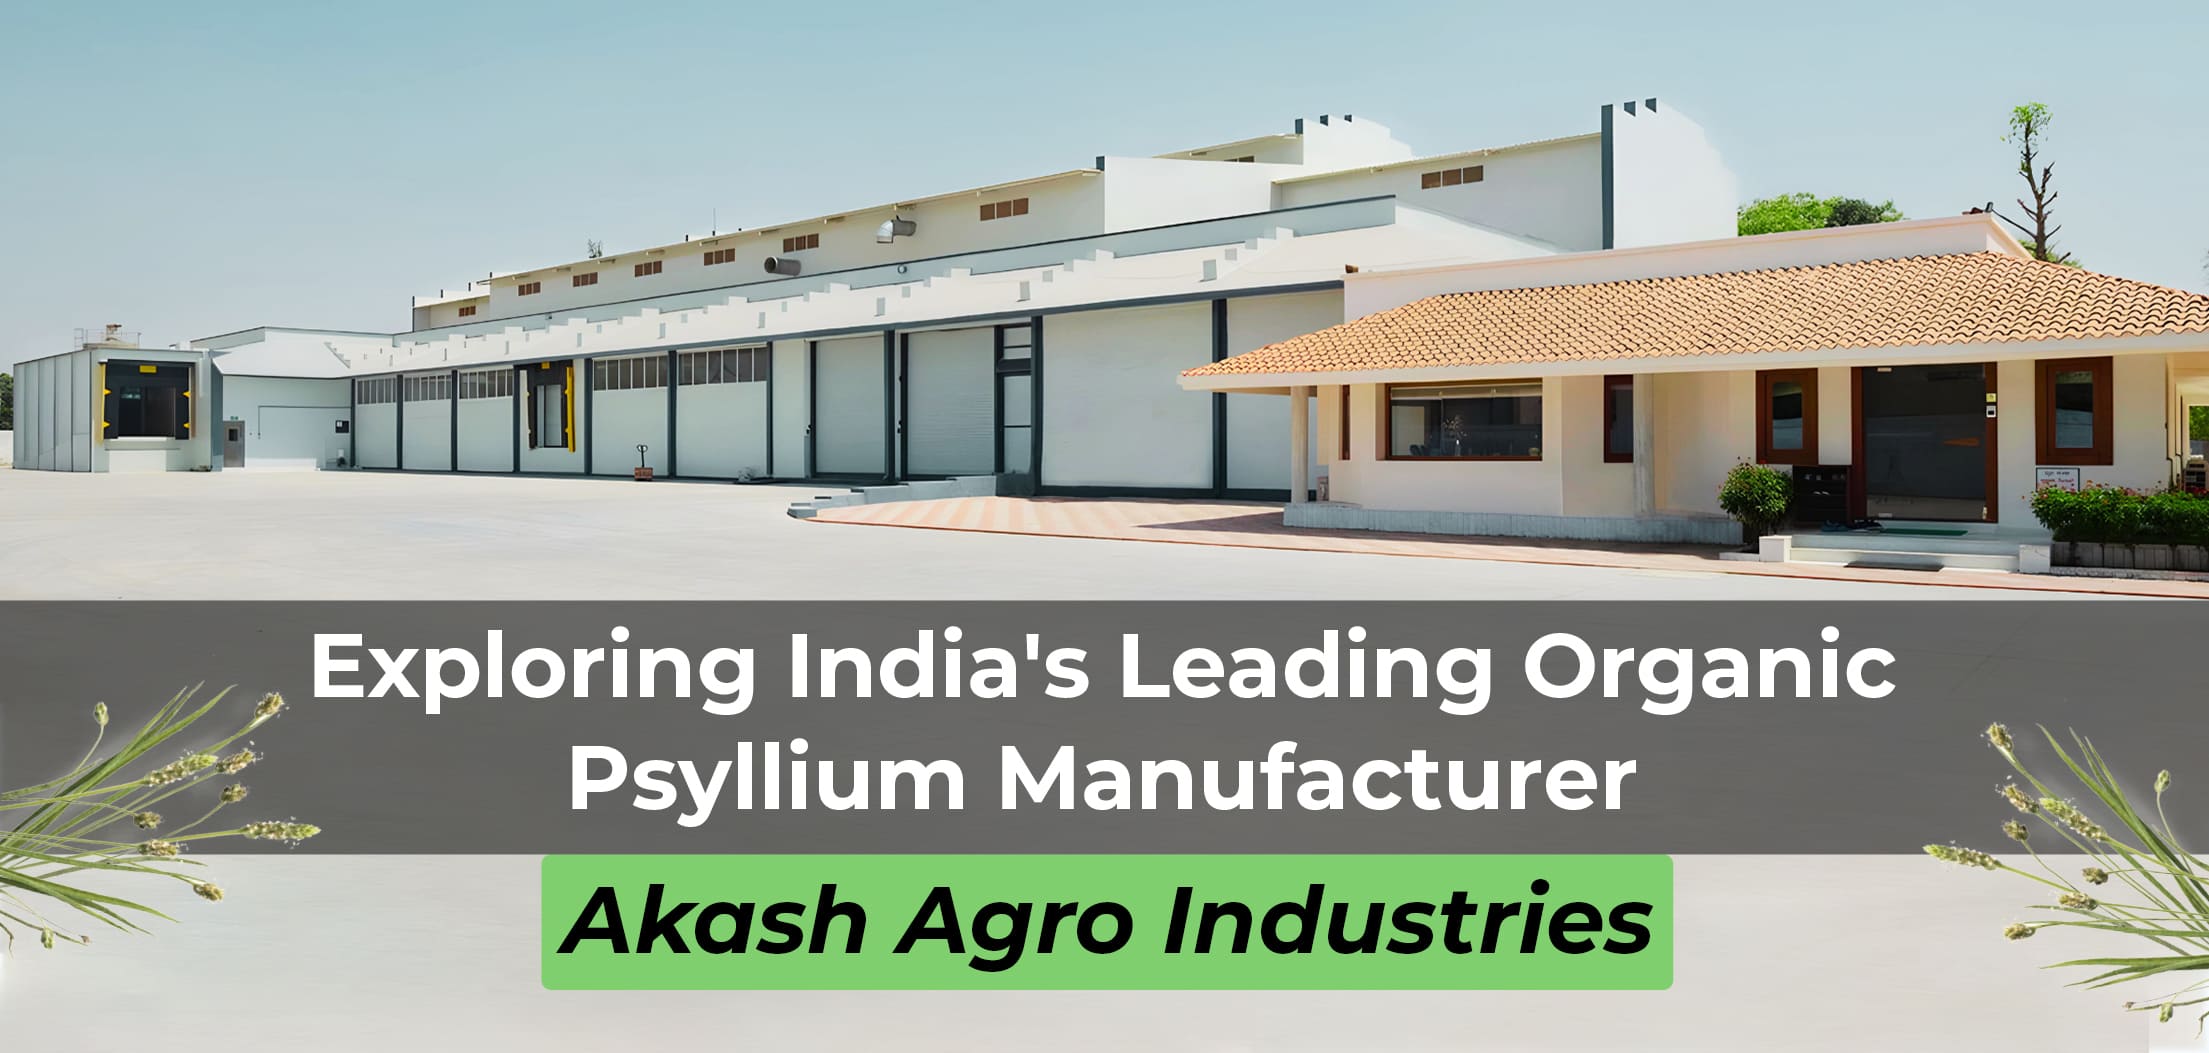 Exploring India's Leading Organic Psyllium Manufacturer: Akash Agro Industries